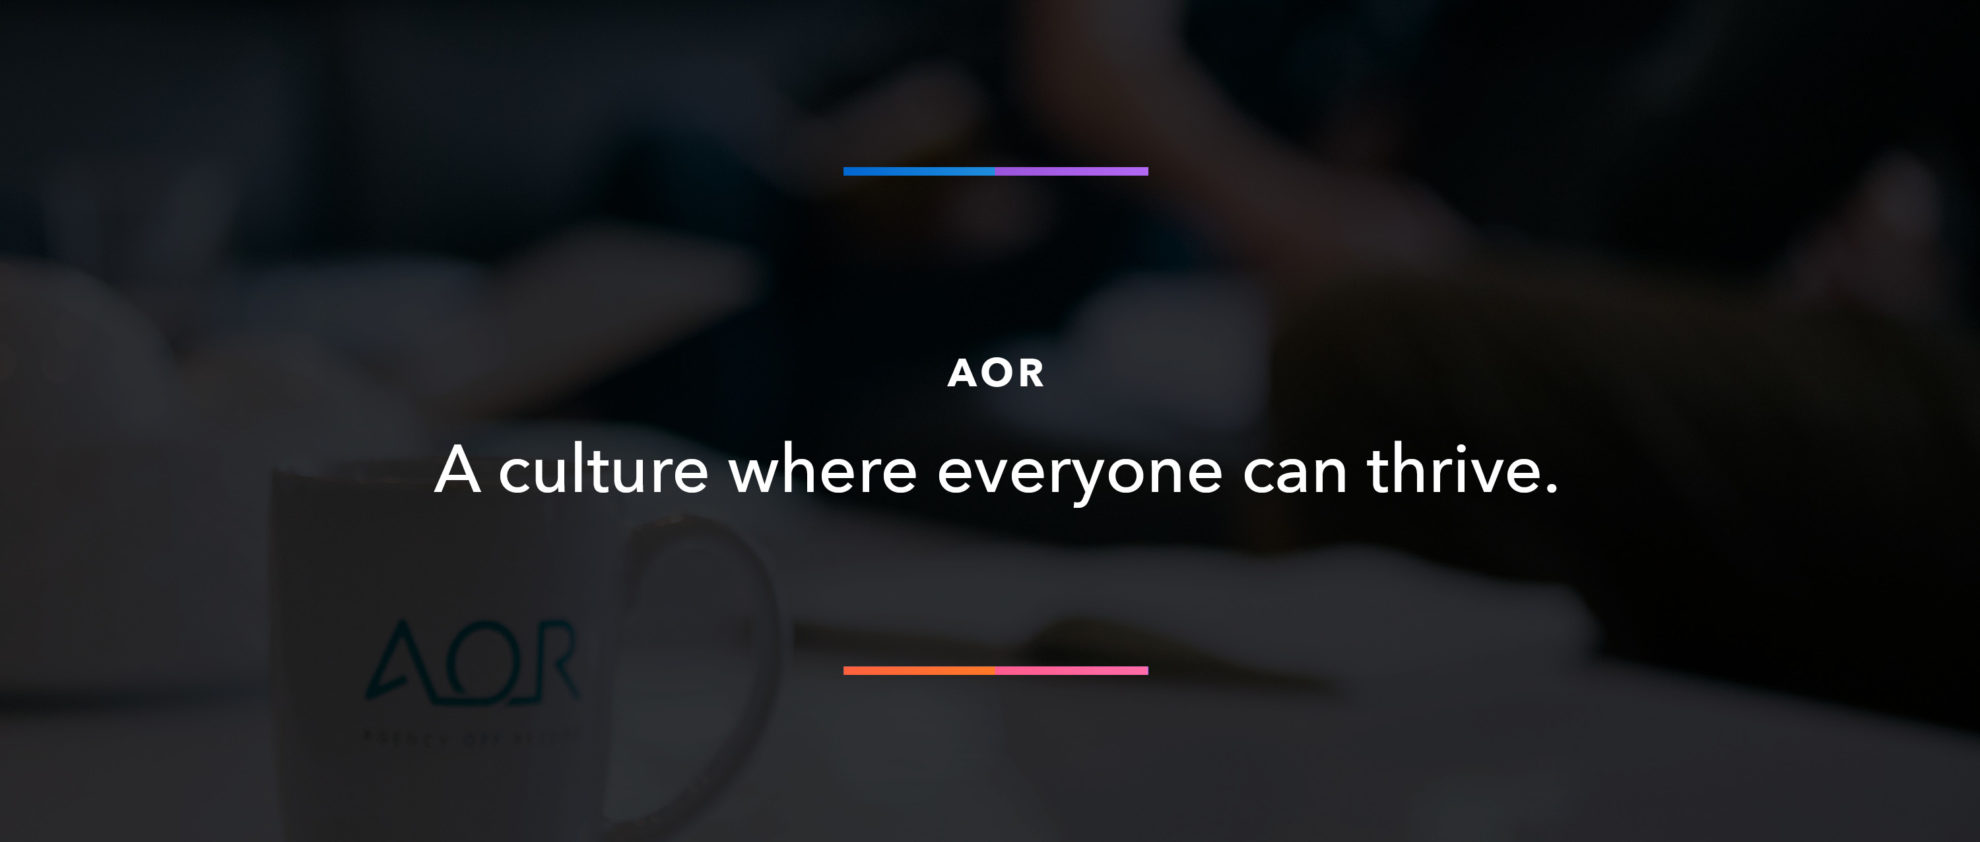 AOR: A culture where everyone can thrive